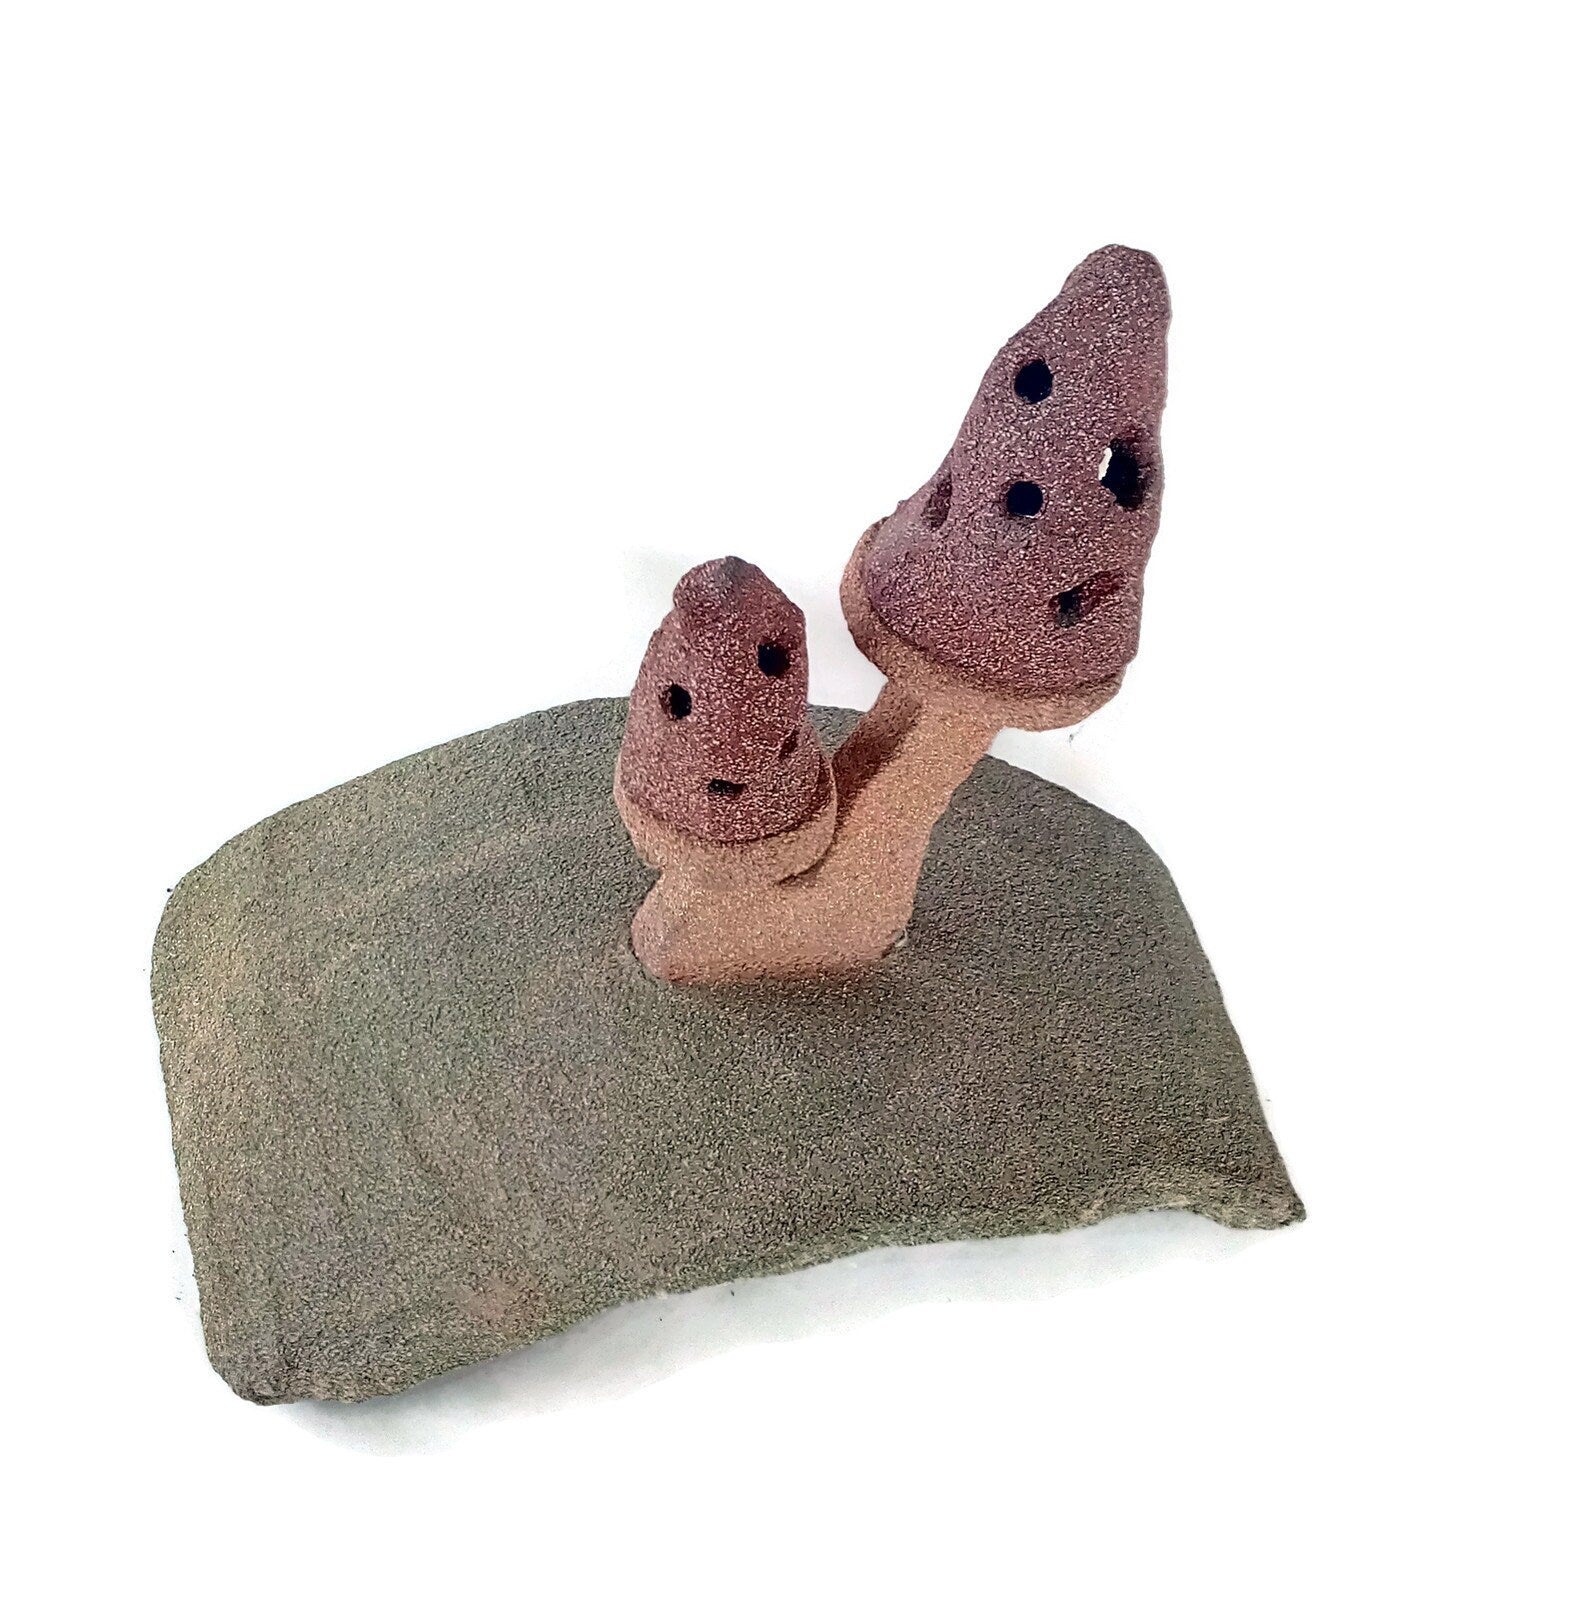 handmade ceramic mushroom sculpture, office desk accessories for men, Best Gifts For Him, mushroom lovers gift, abstract sculpture weird - Ceramica Ana Rafael